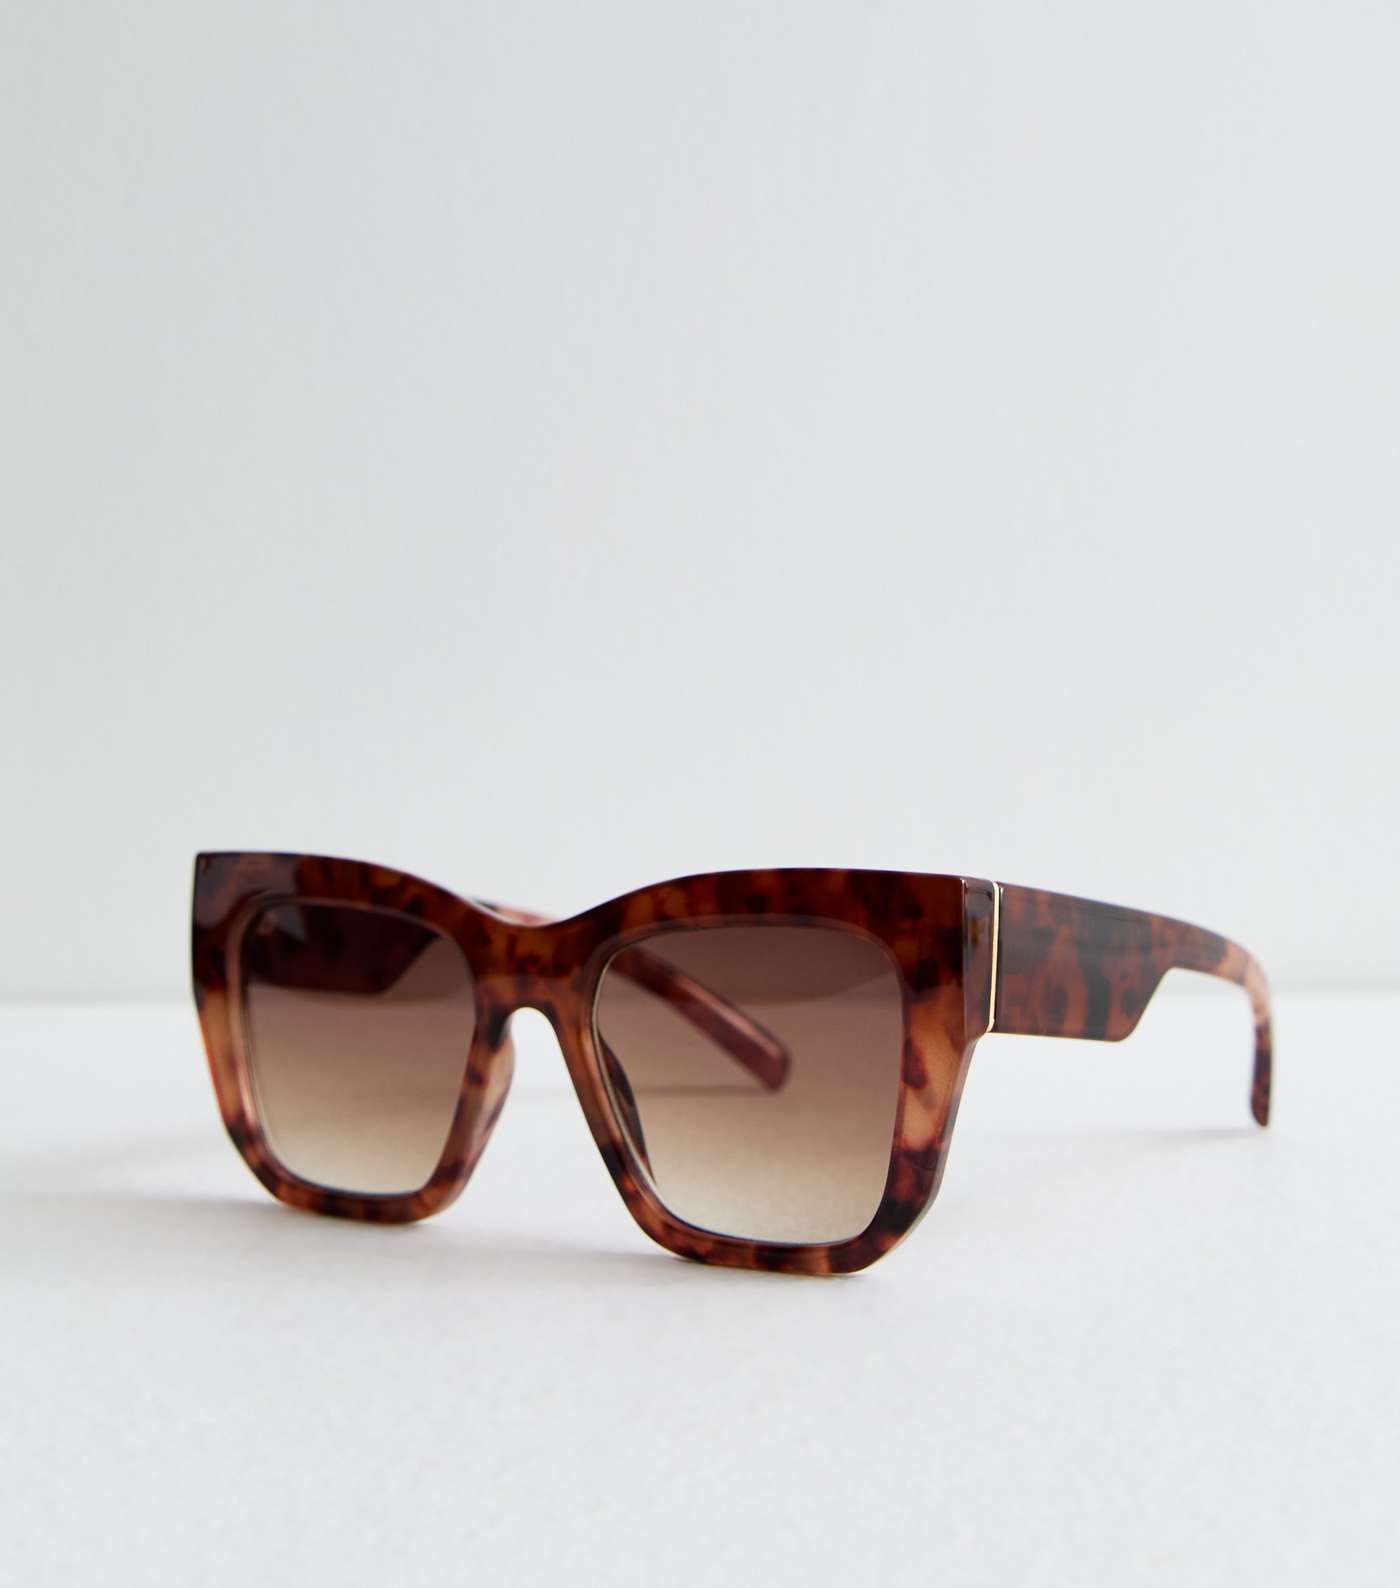 Brown Tortoiseshell Square Frame Sunglasses Image 2